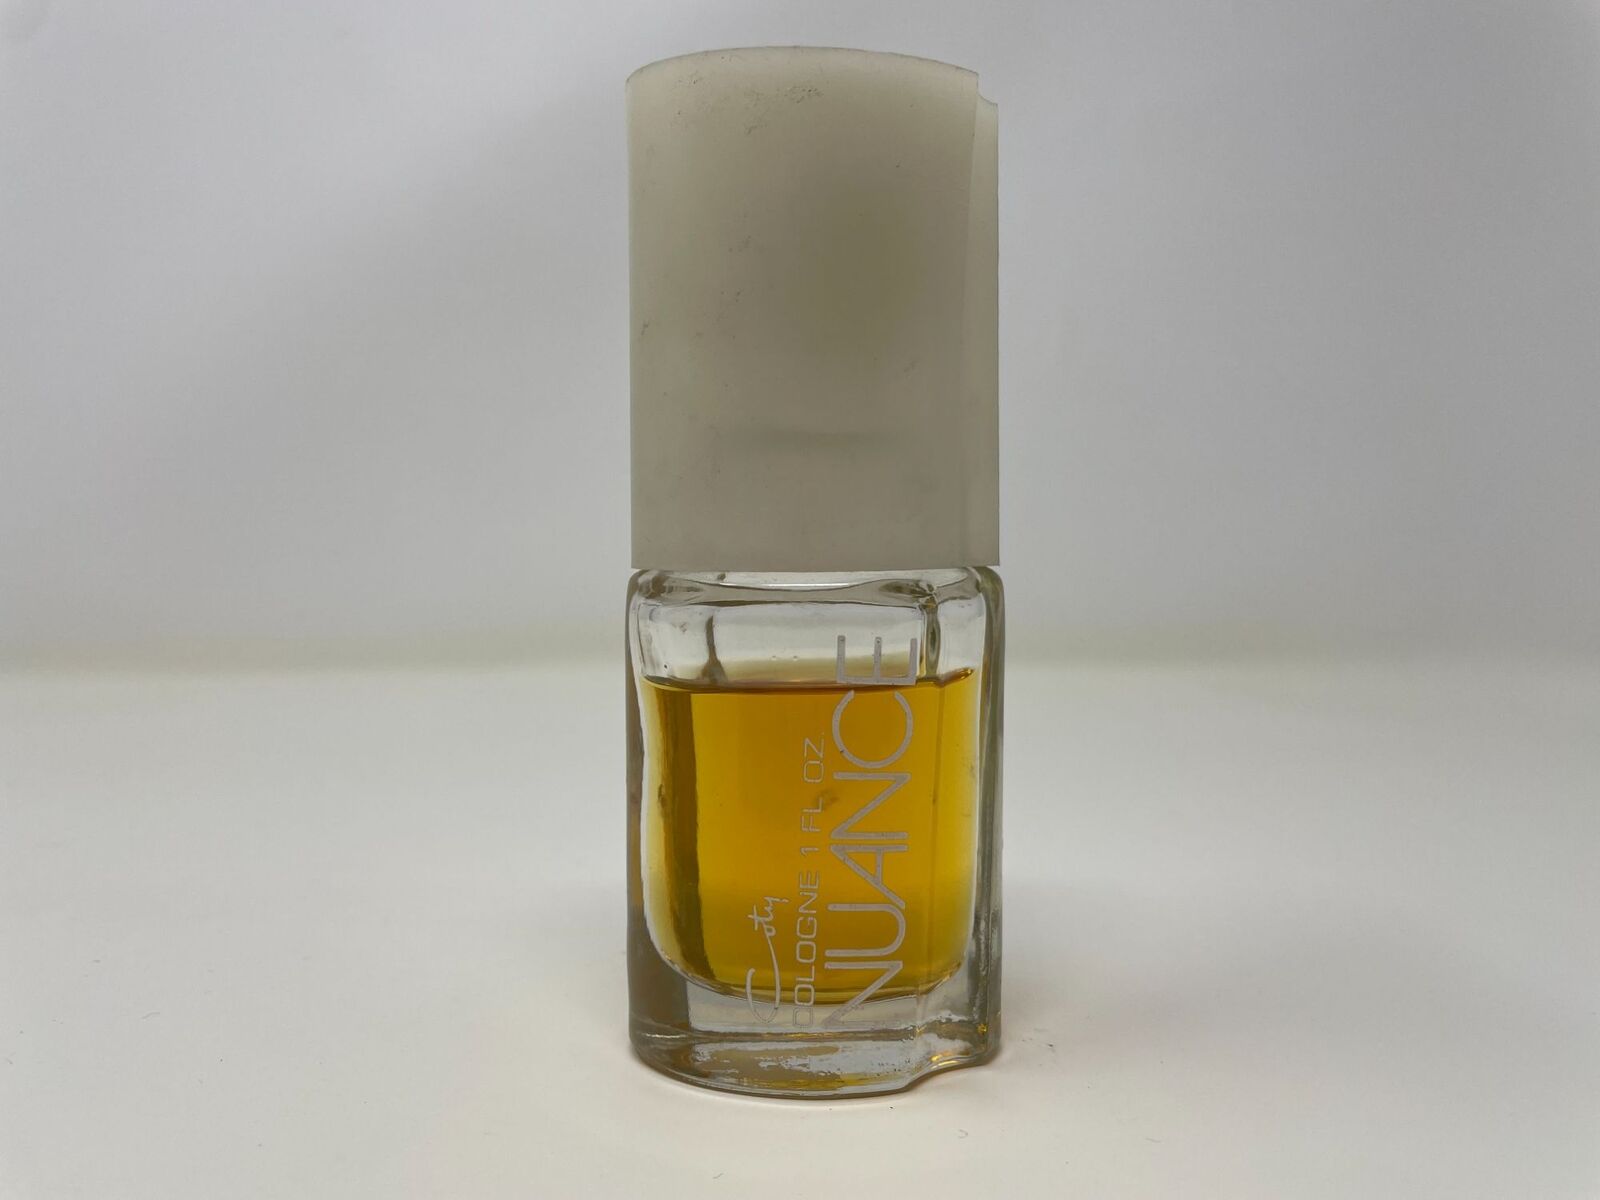 Nuance Cologne By Coty Womens Perfume Spray 1 oz Vintage